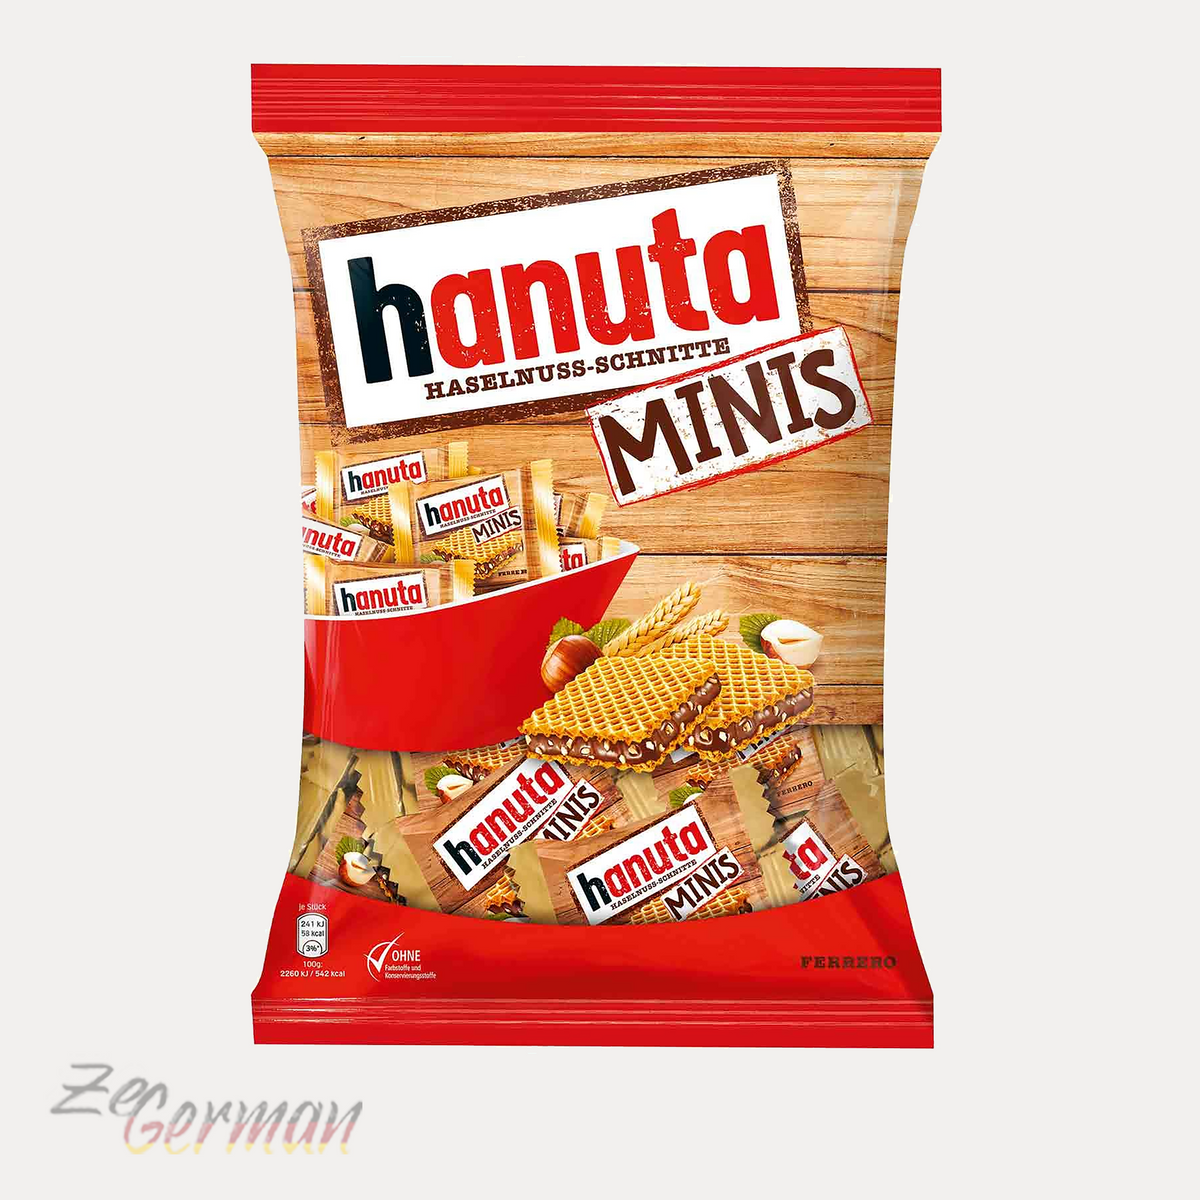 Hanuta Haselnuss-Schnitten Minis, 200 g